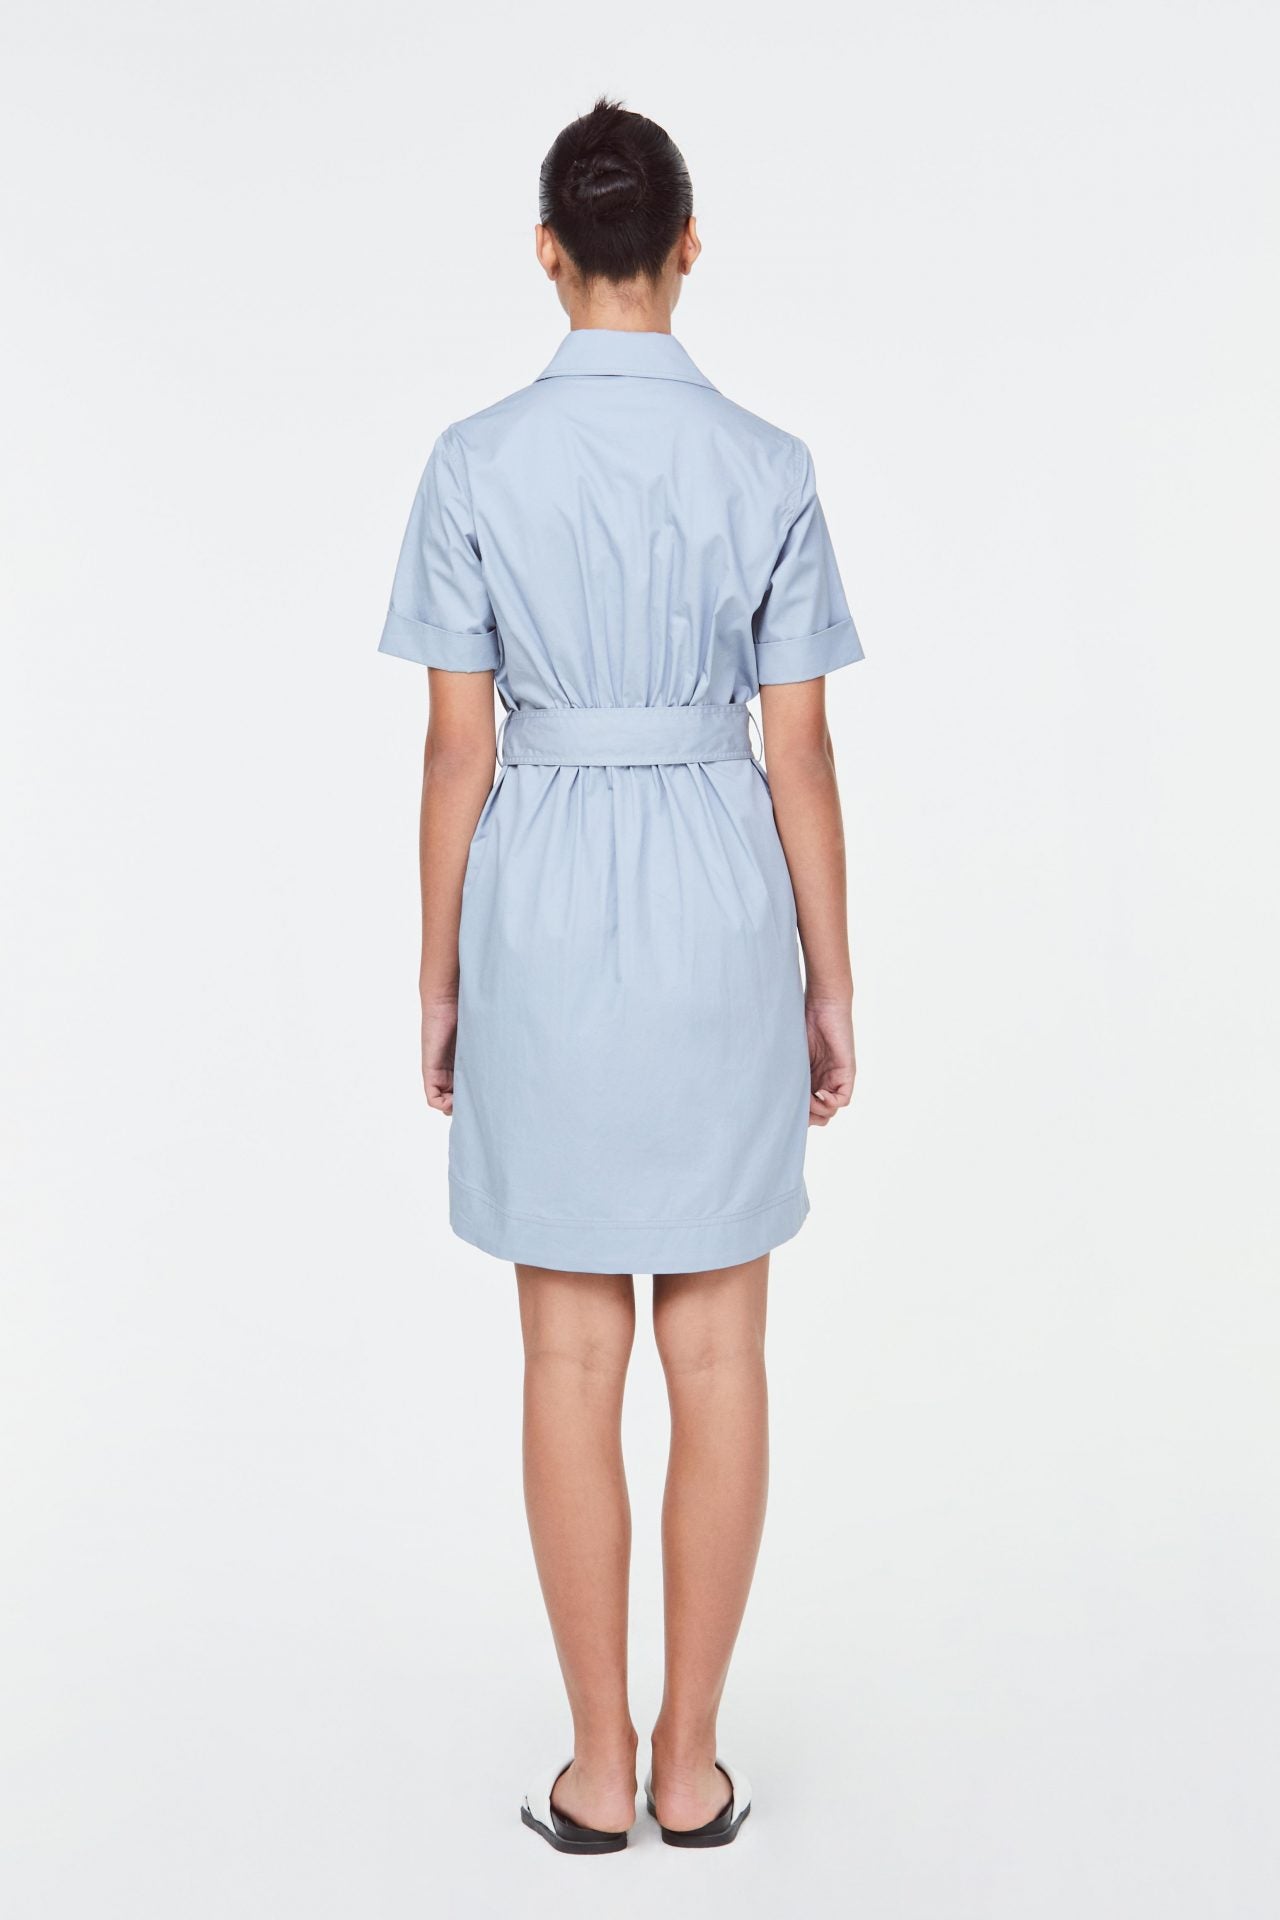 10480 Top Stitched A Linen Dress Grey Blue B